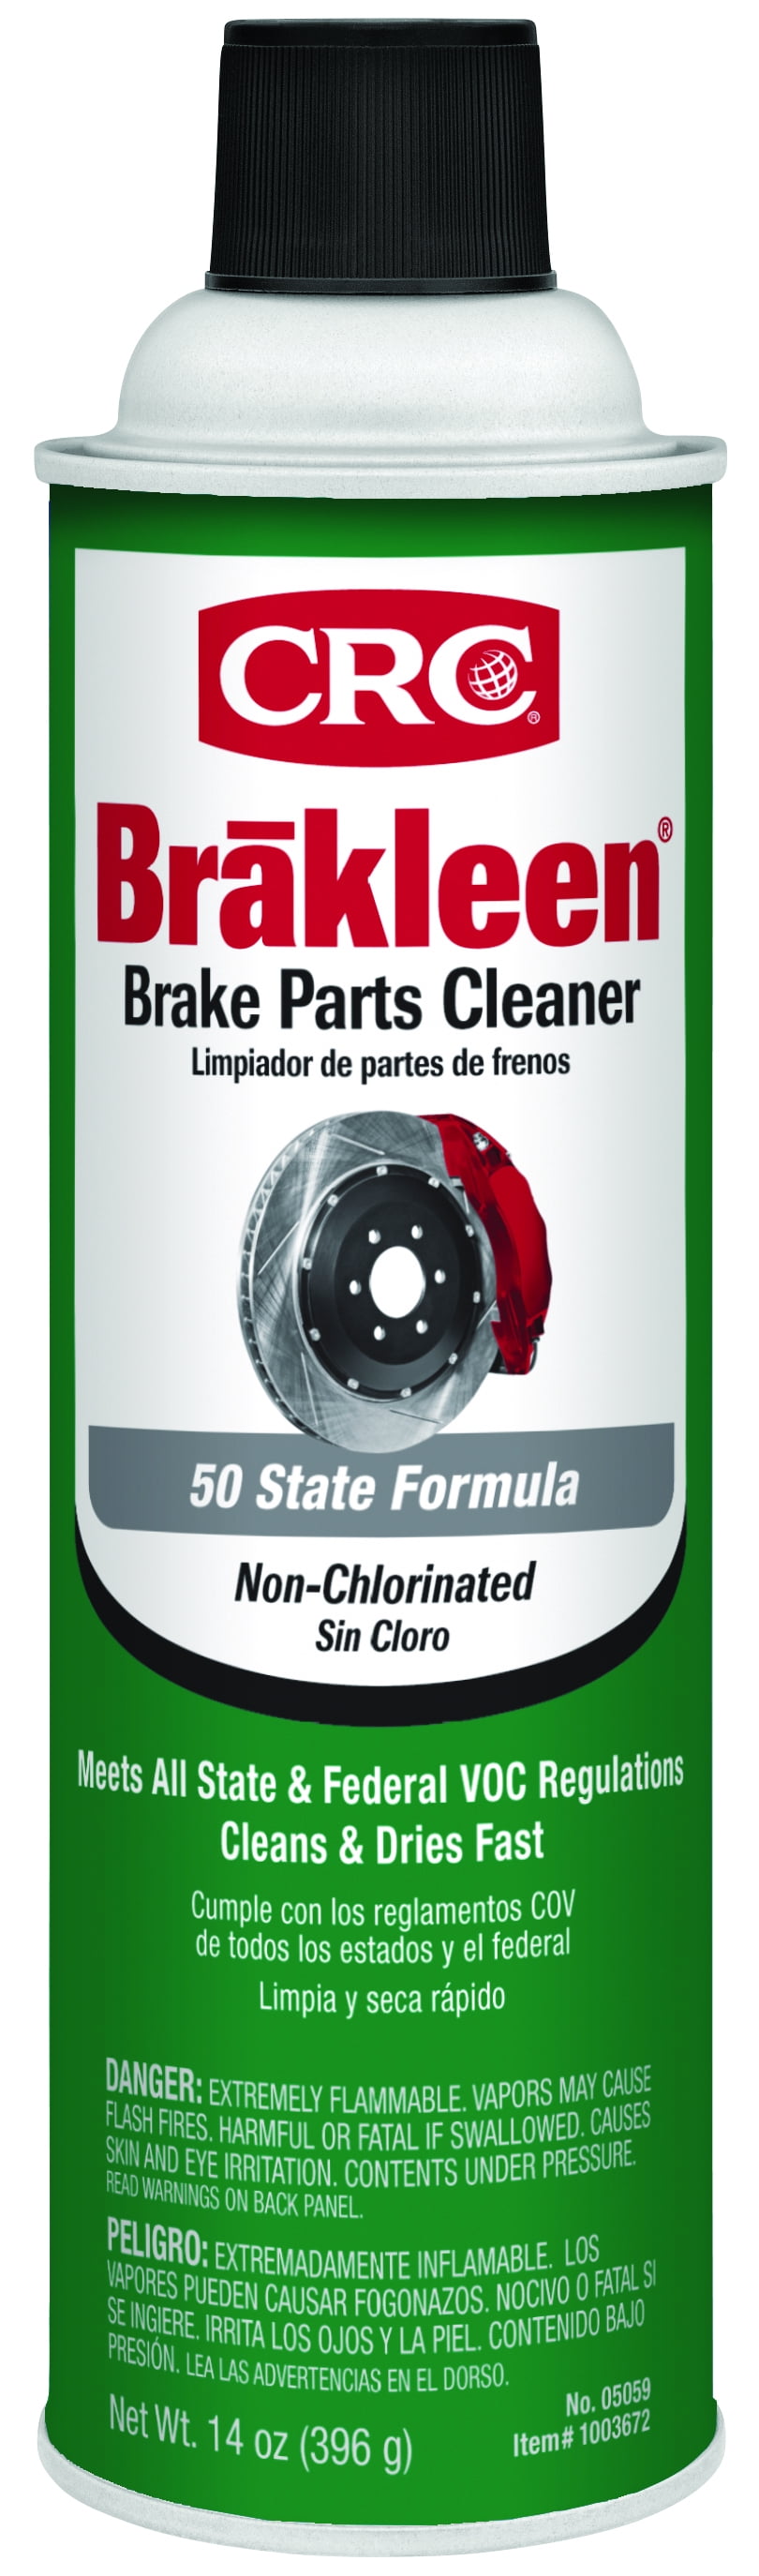 CRC Brakleen Non-Chlorinated Brake Parts Cleaner, 1 Gallon, 209513